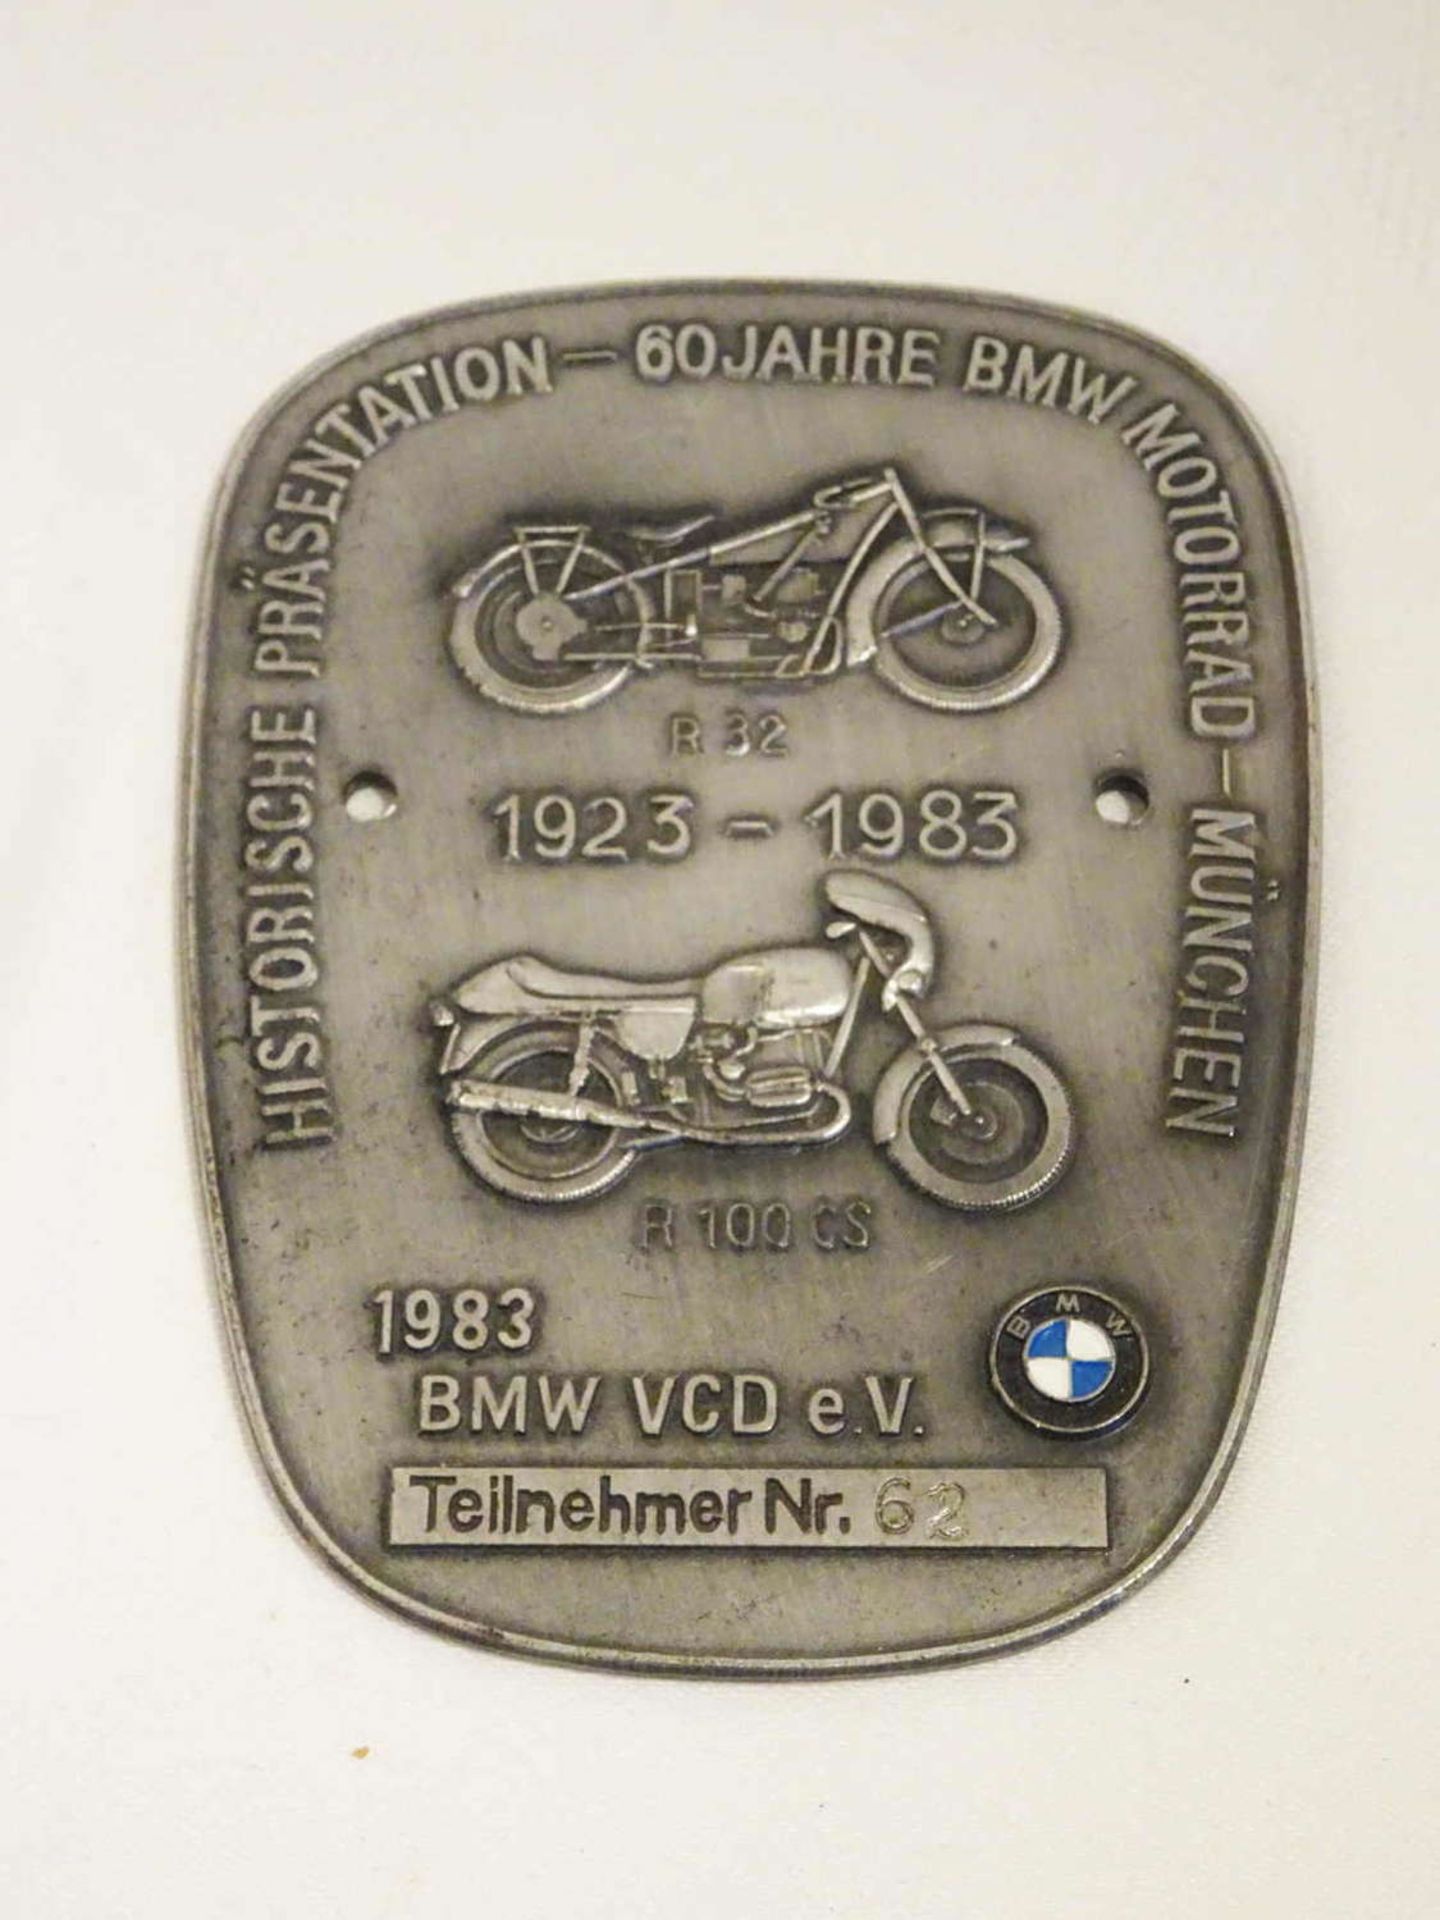 Plaque historical presentation - 60 years BMW Motorrad - Munich 1923-1983, BMW VCD e.V. - Bild 2 aus 2